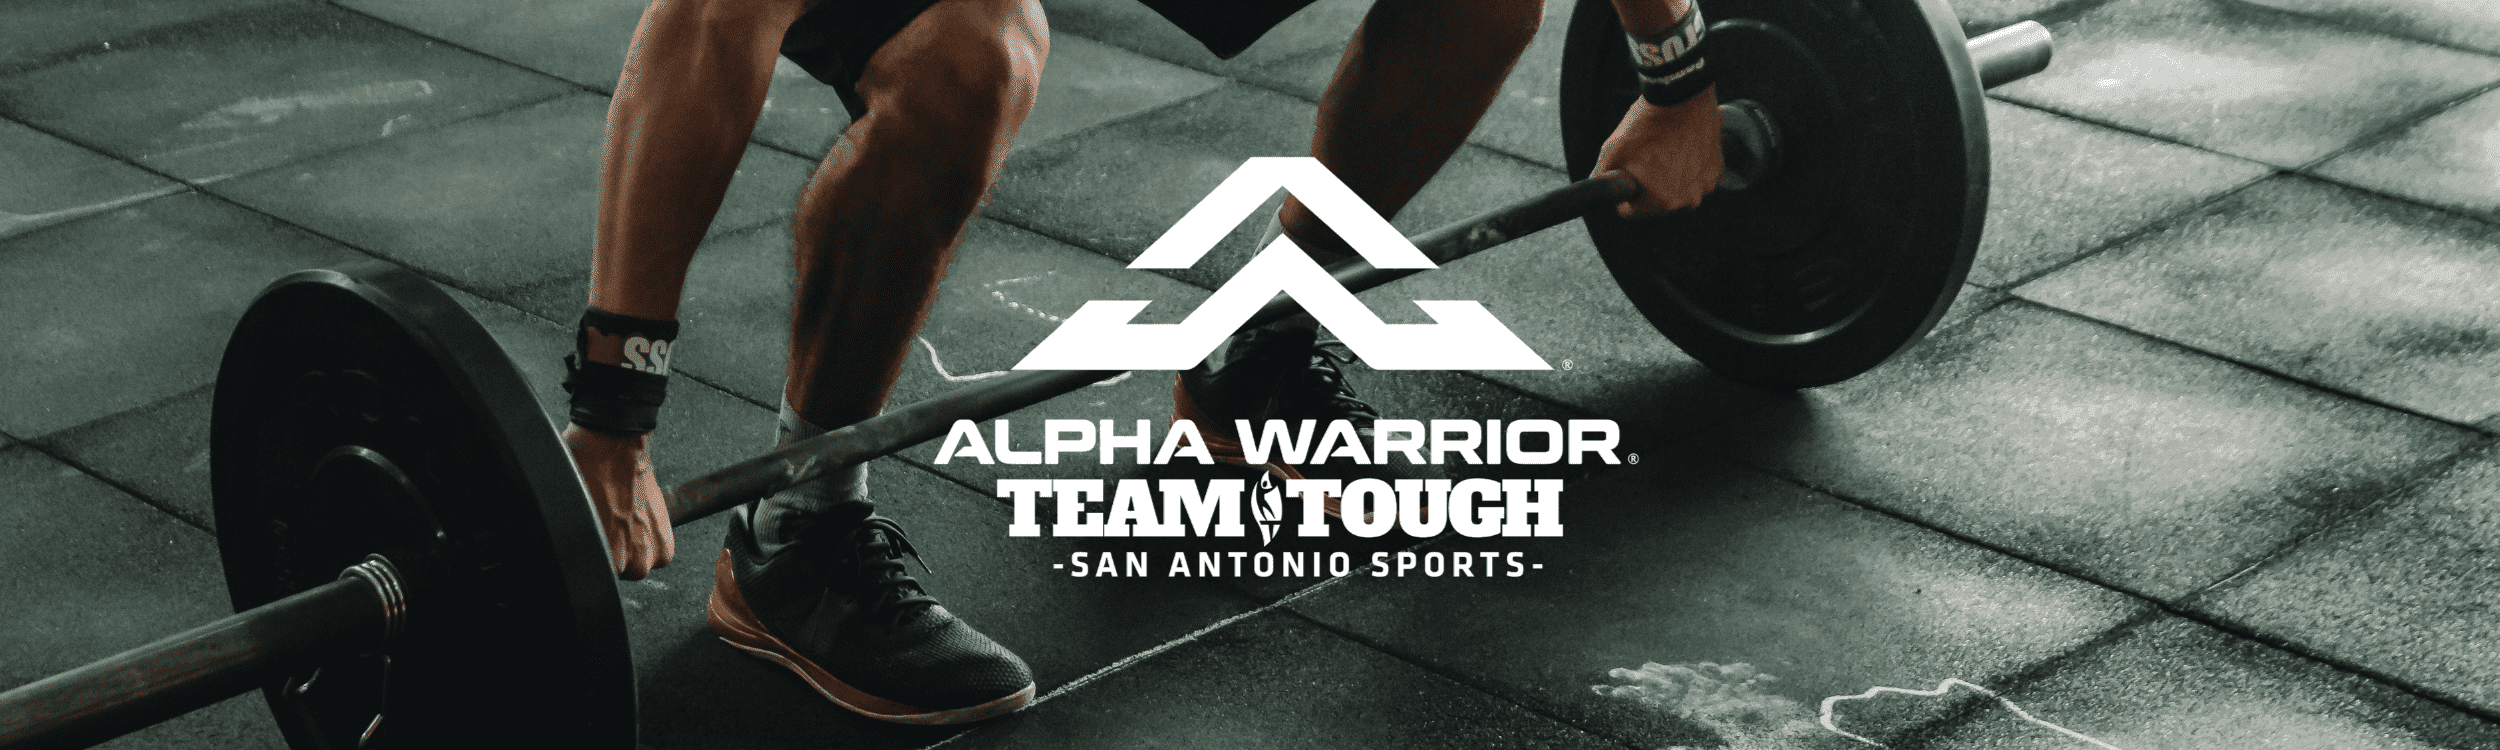 San Antonio Sports’ Team Tough Challenge Makes It To The Finish Line